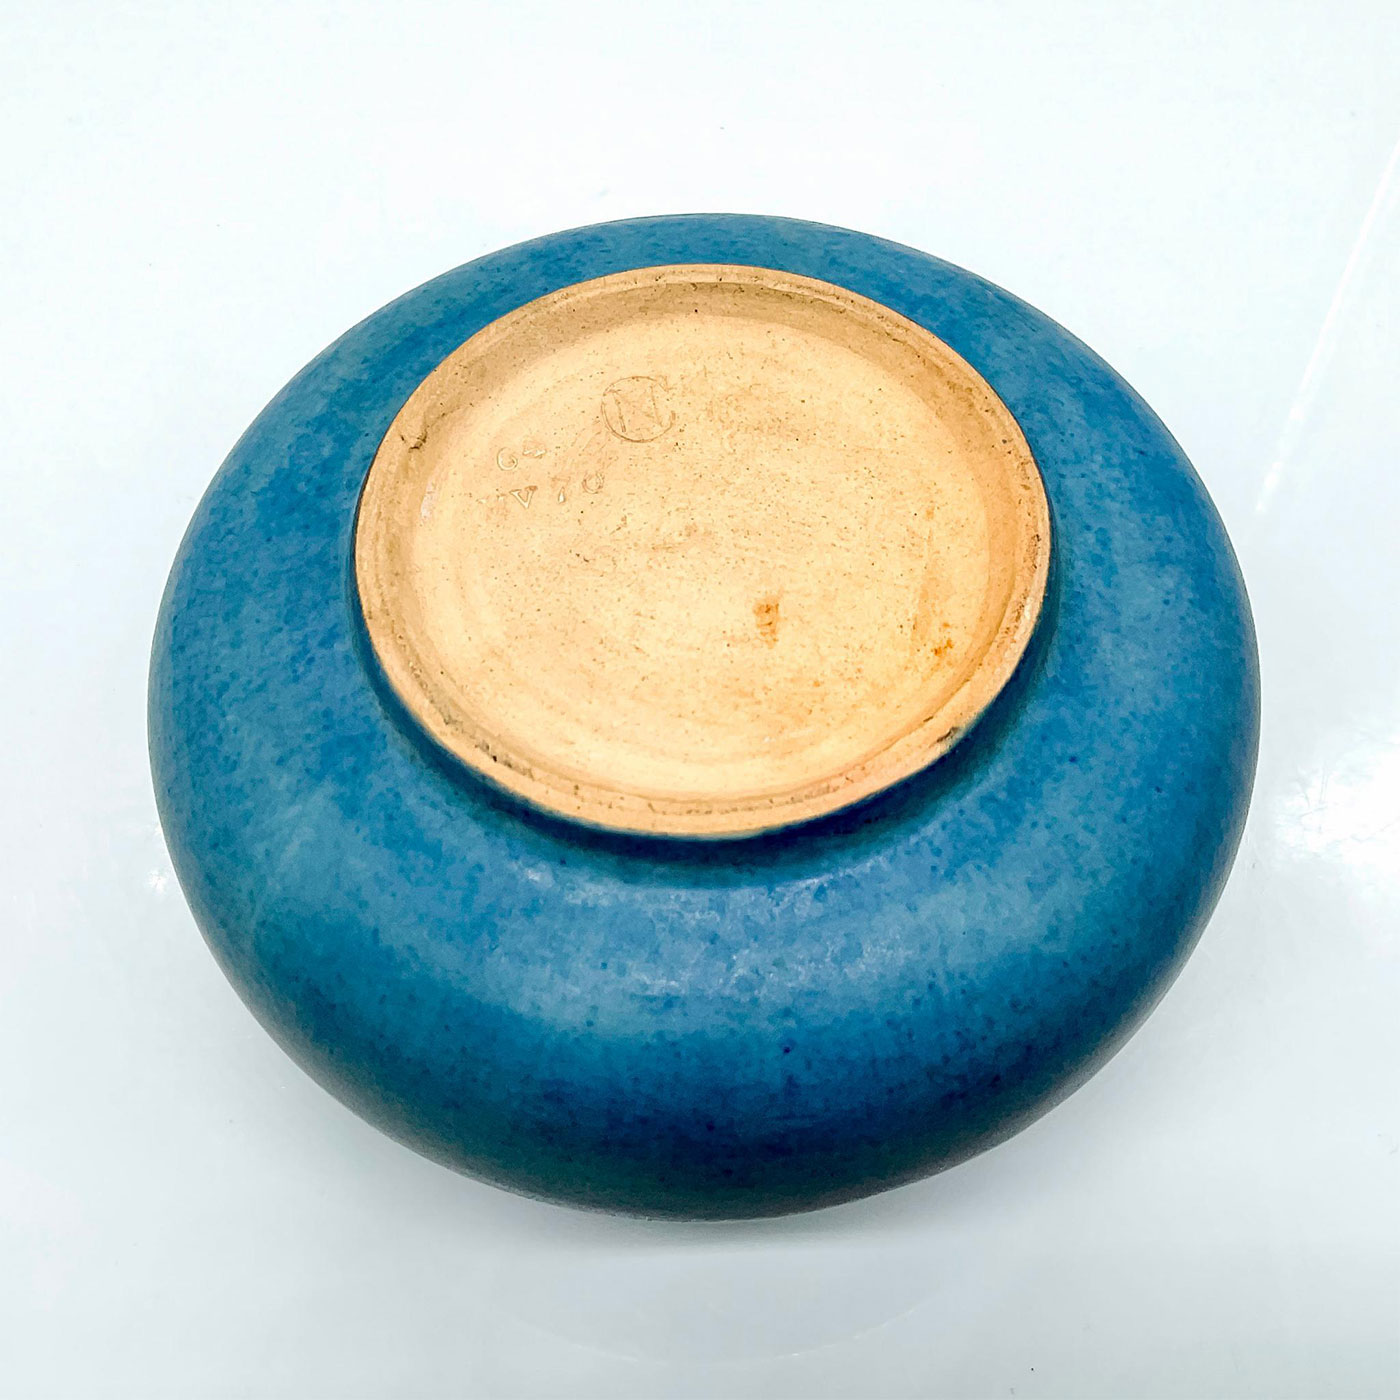 Newcomb Pottery Sadie Irvine/J. Meyer, Blue Floral Bowl - Image 3 of 3